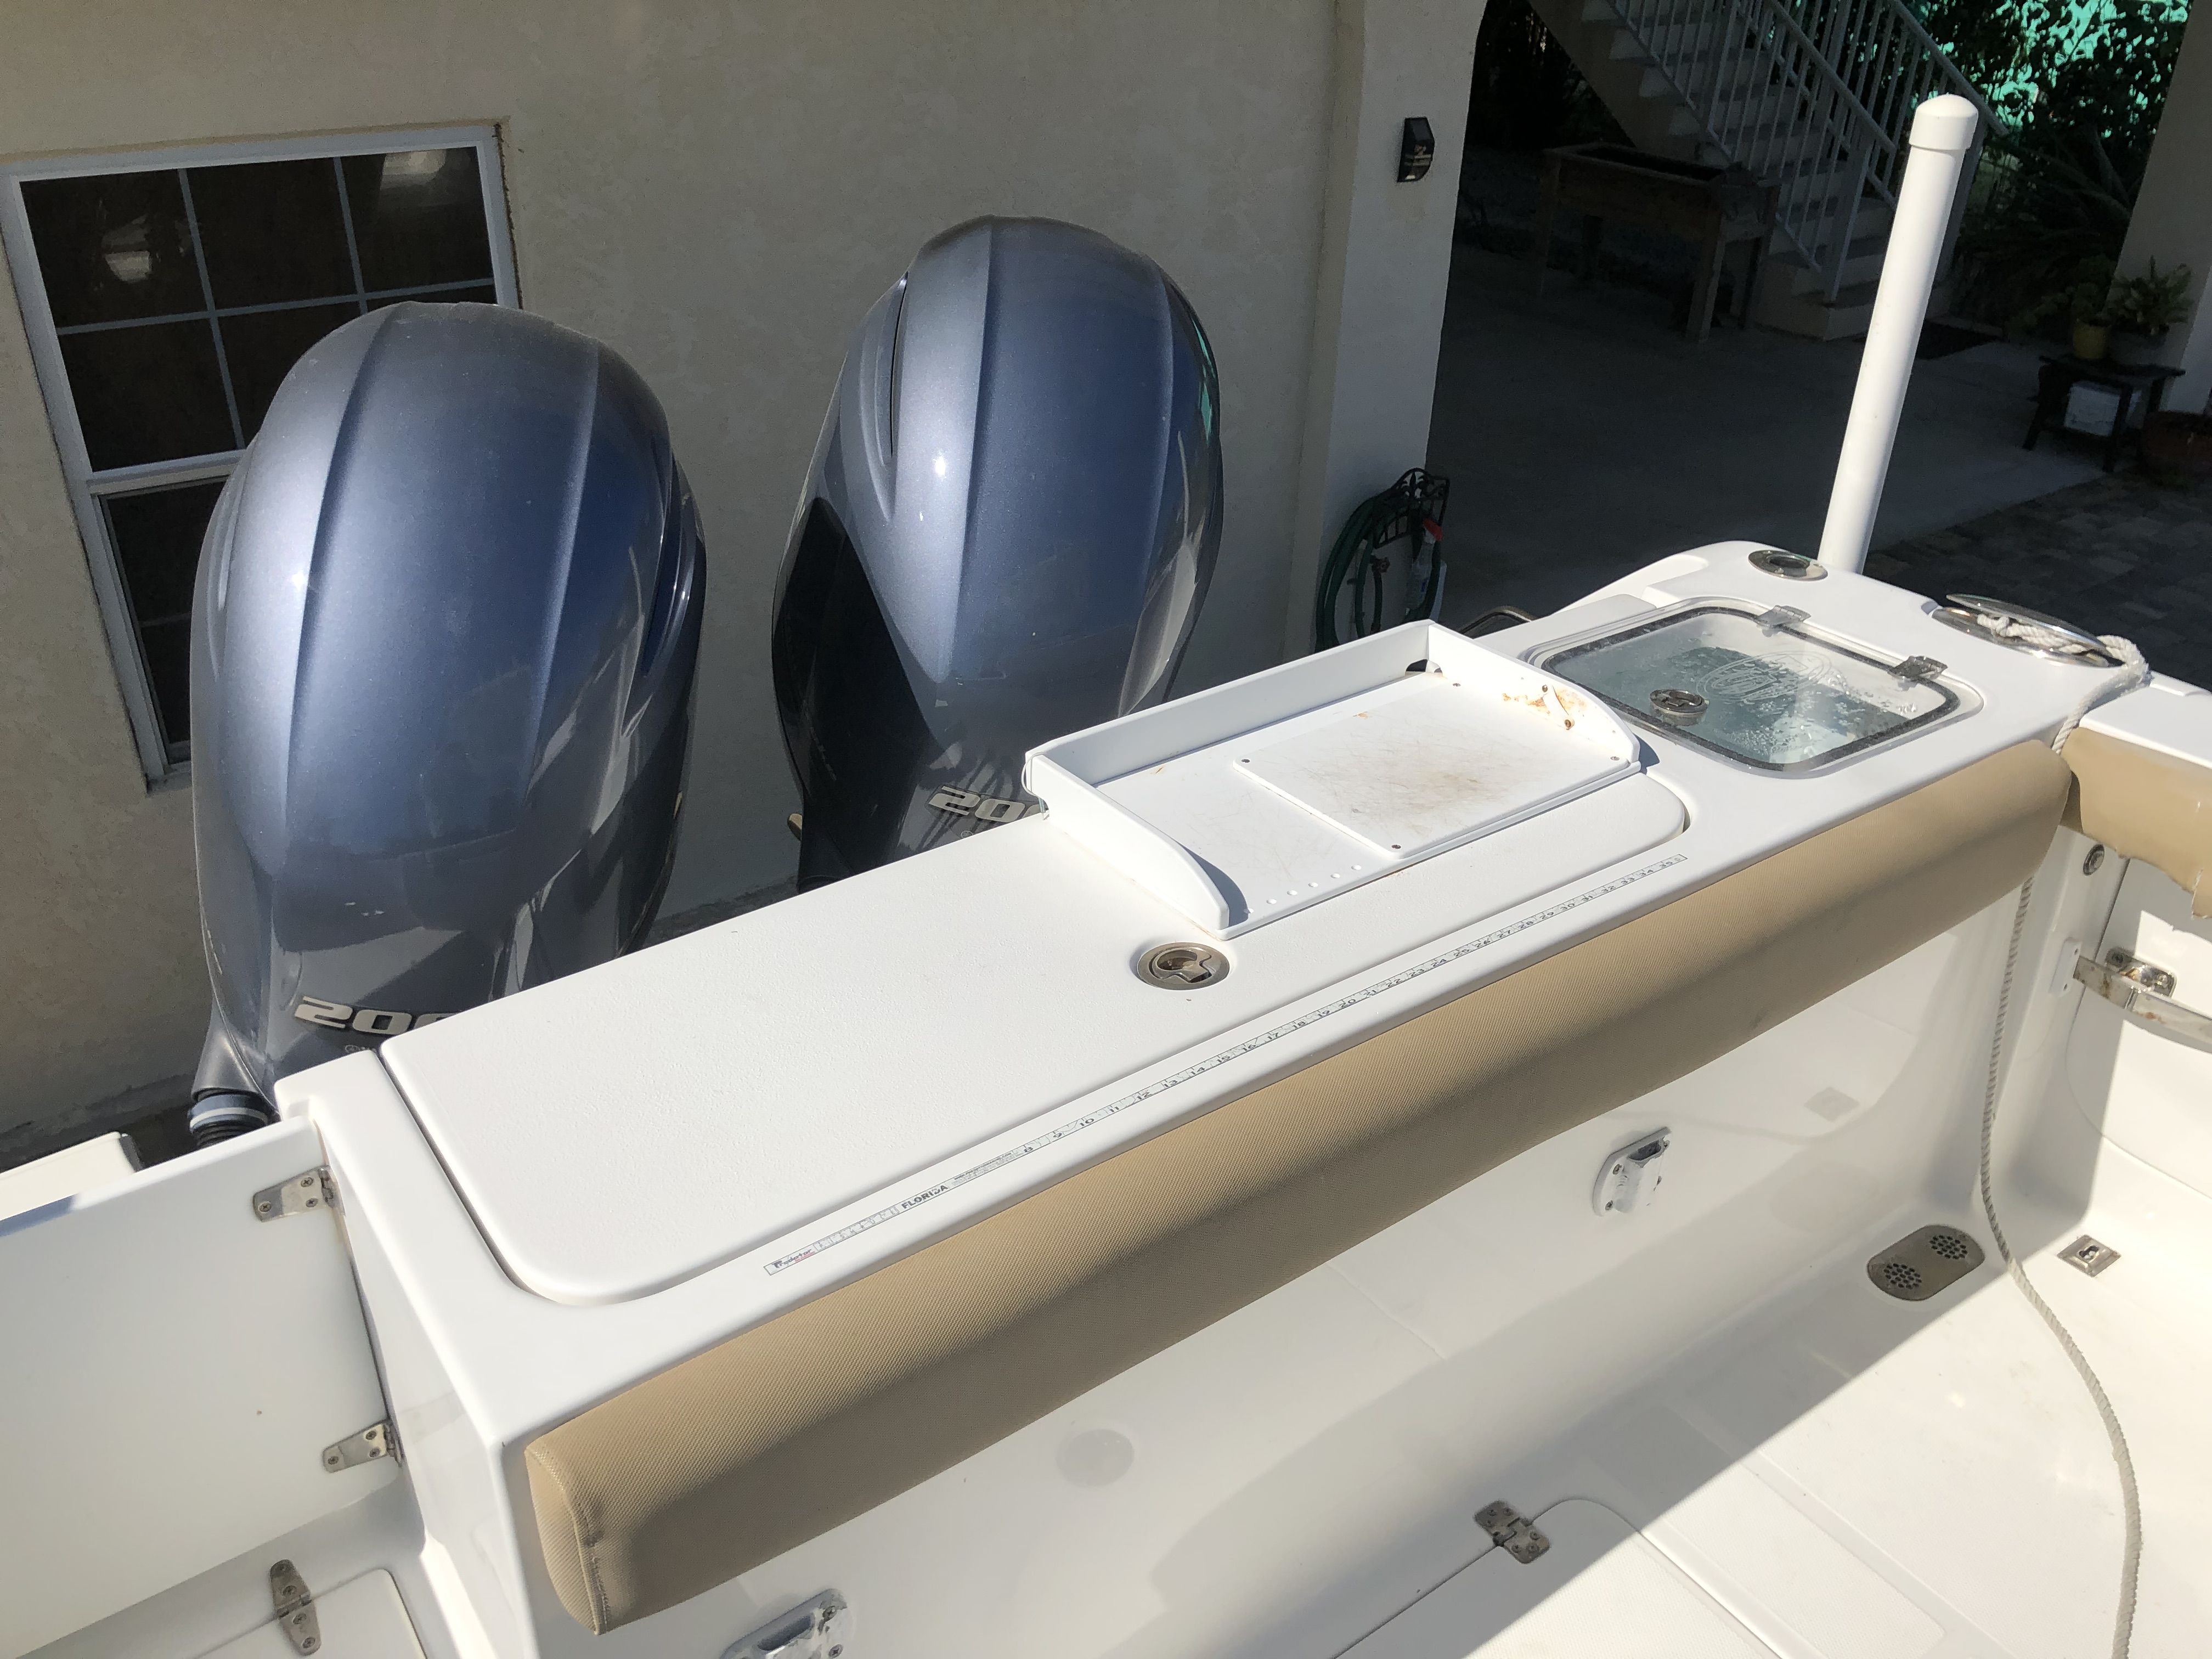 2016 Sea Hunt Gamefish 27CB Power boat for sale in Ramrod Key, FL - image 6 